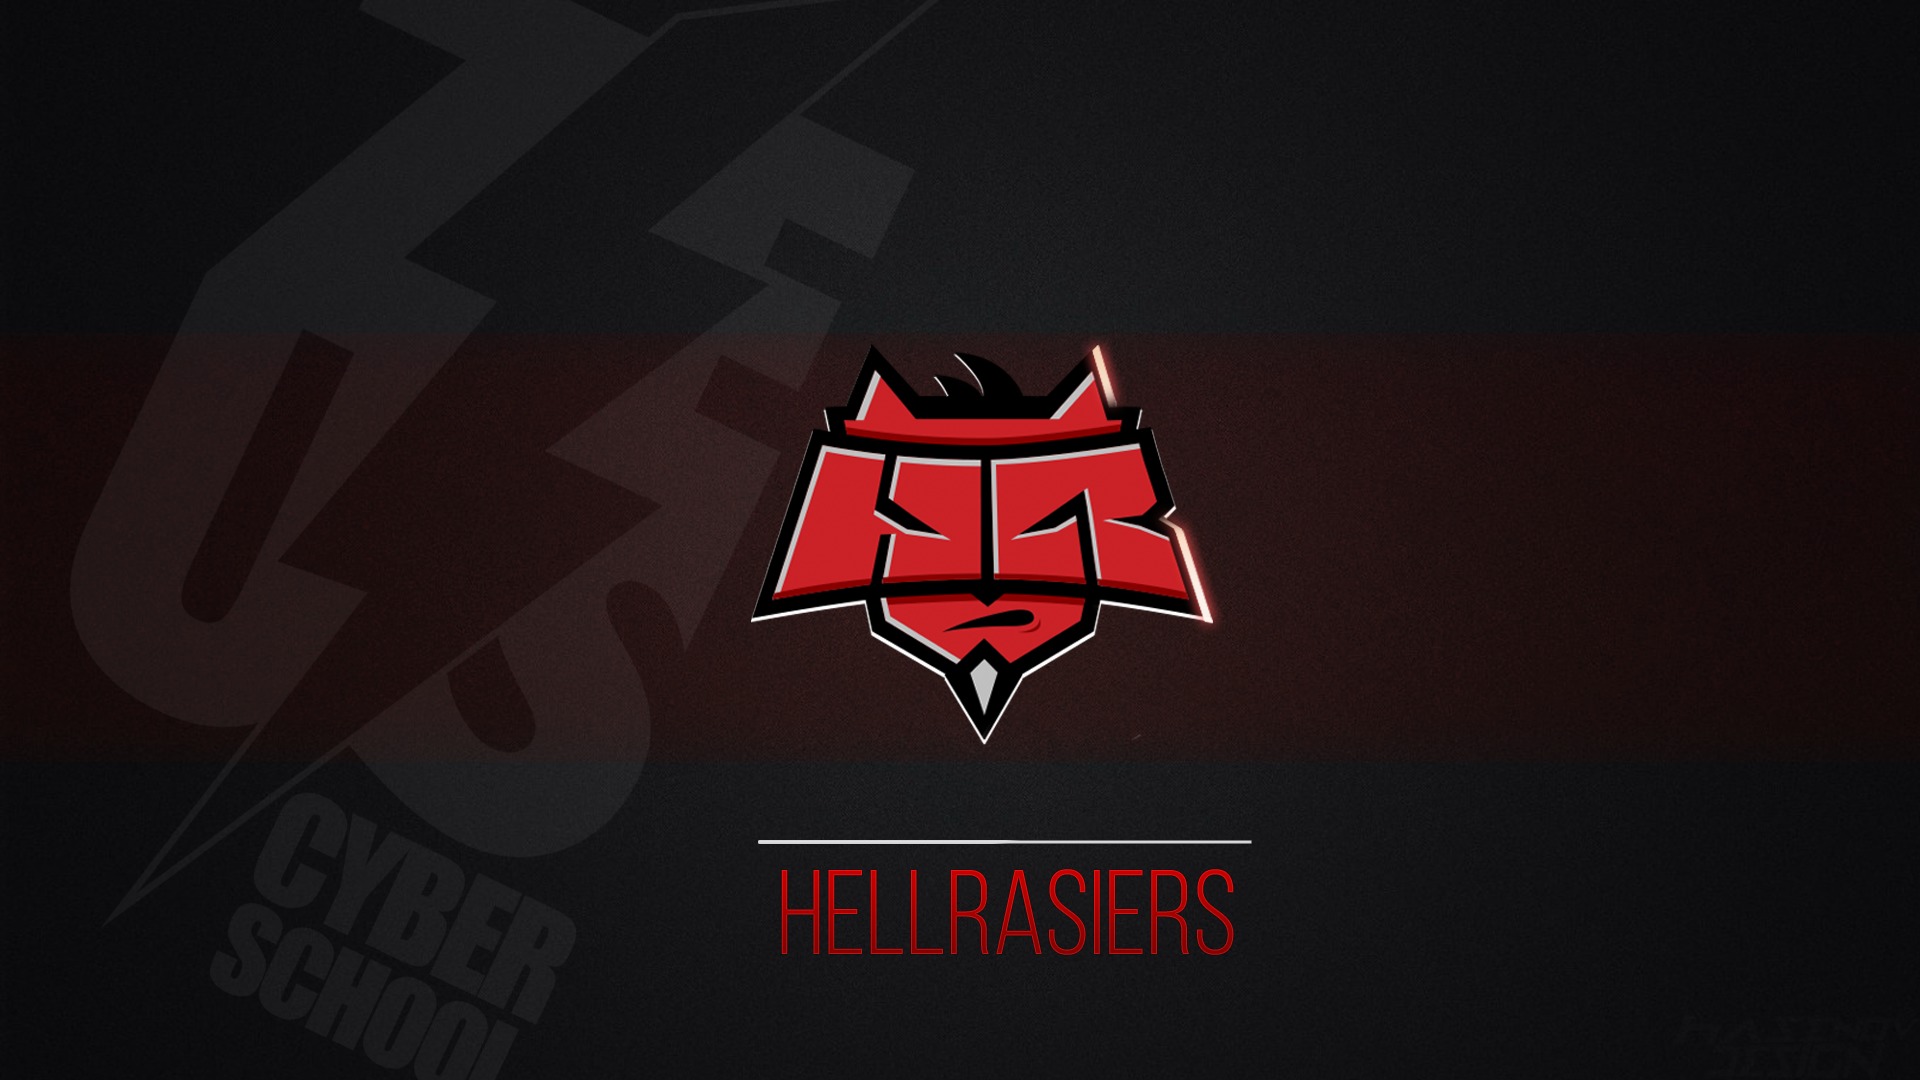 Team games 5. Хелрейзерс КС го. Логотип хелрейзерс. Логотип команды Hellraisers. Hellraiser киберспорт.